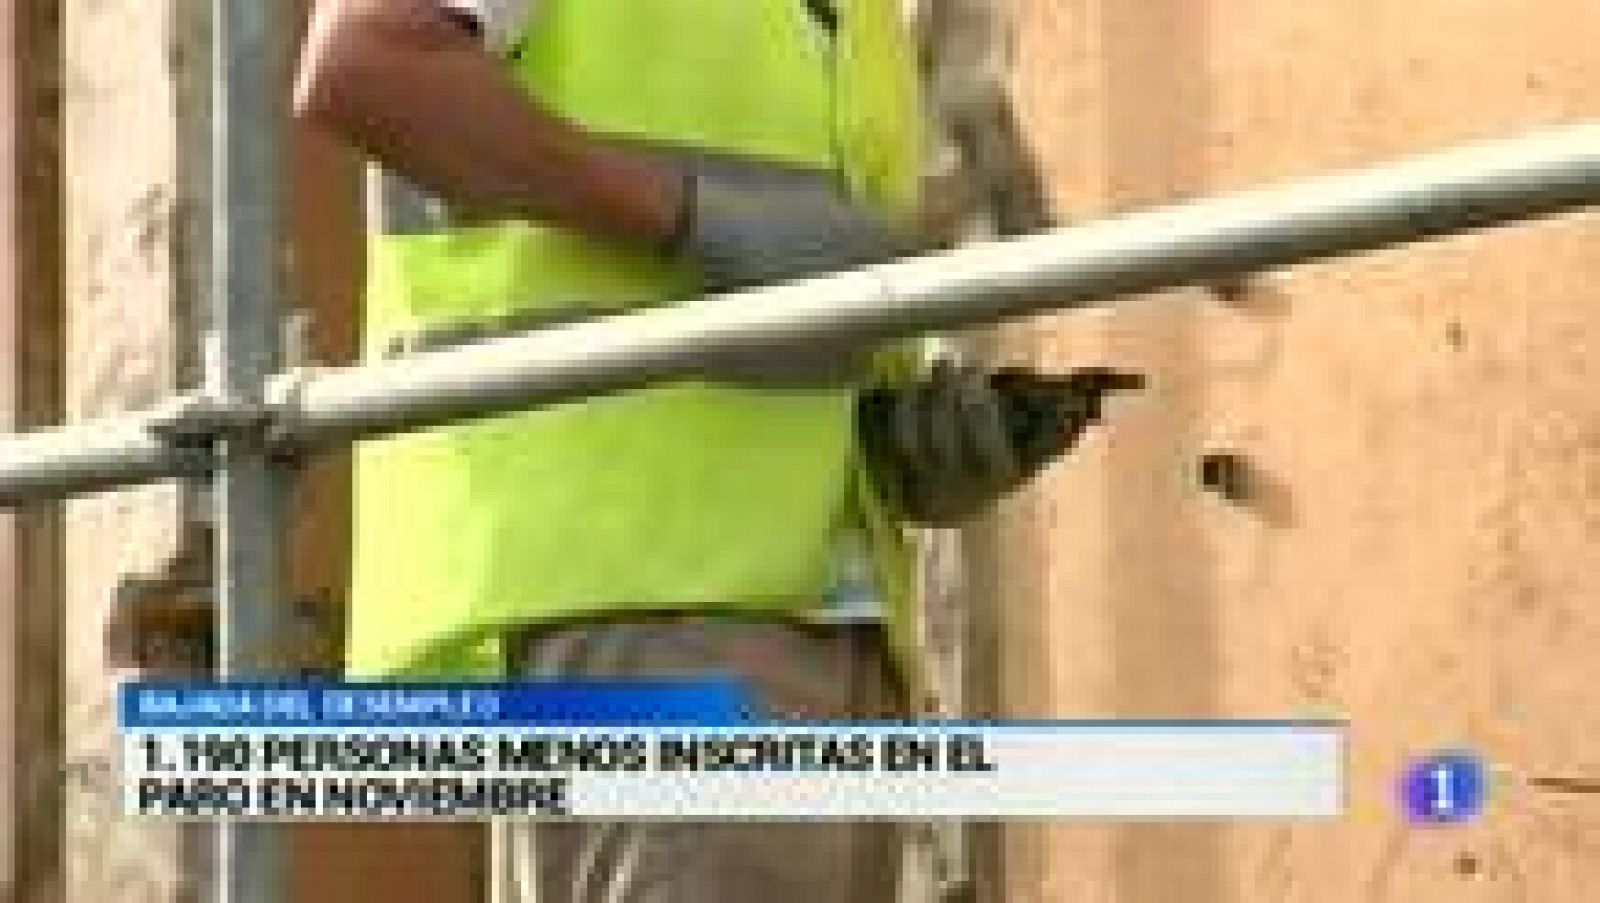 Noticias de Extremadura: Noticias de Extremadura - 02/12/14 | RTVE Play